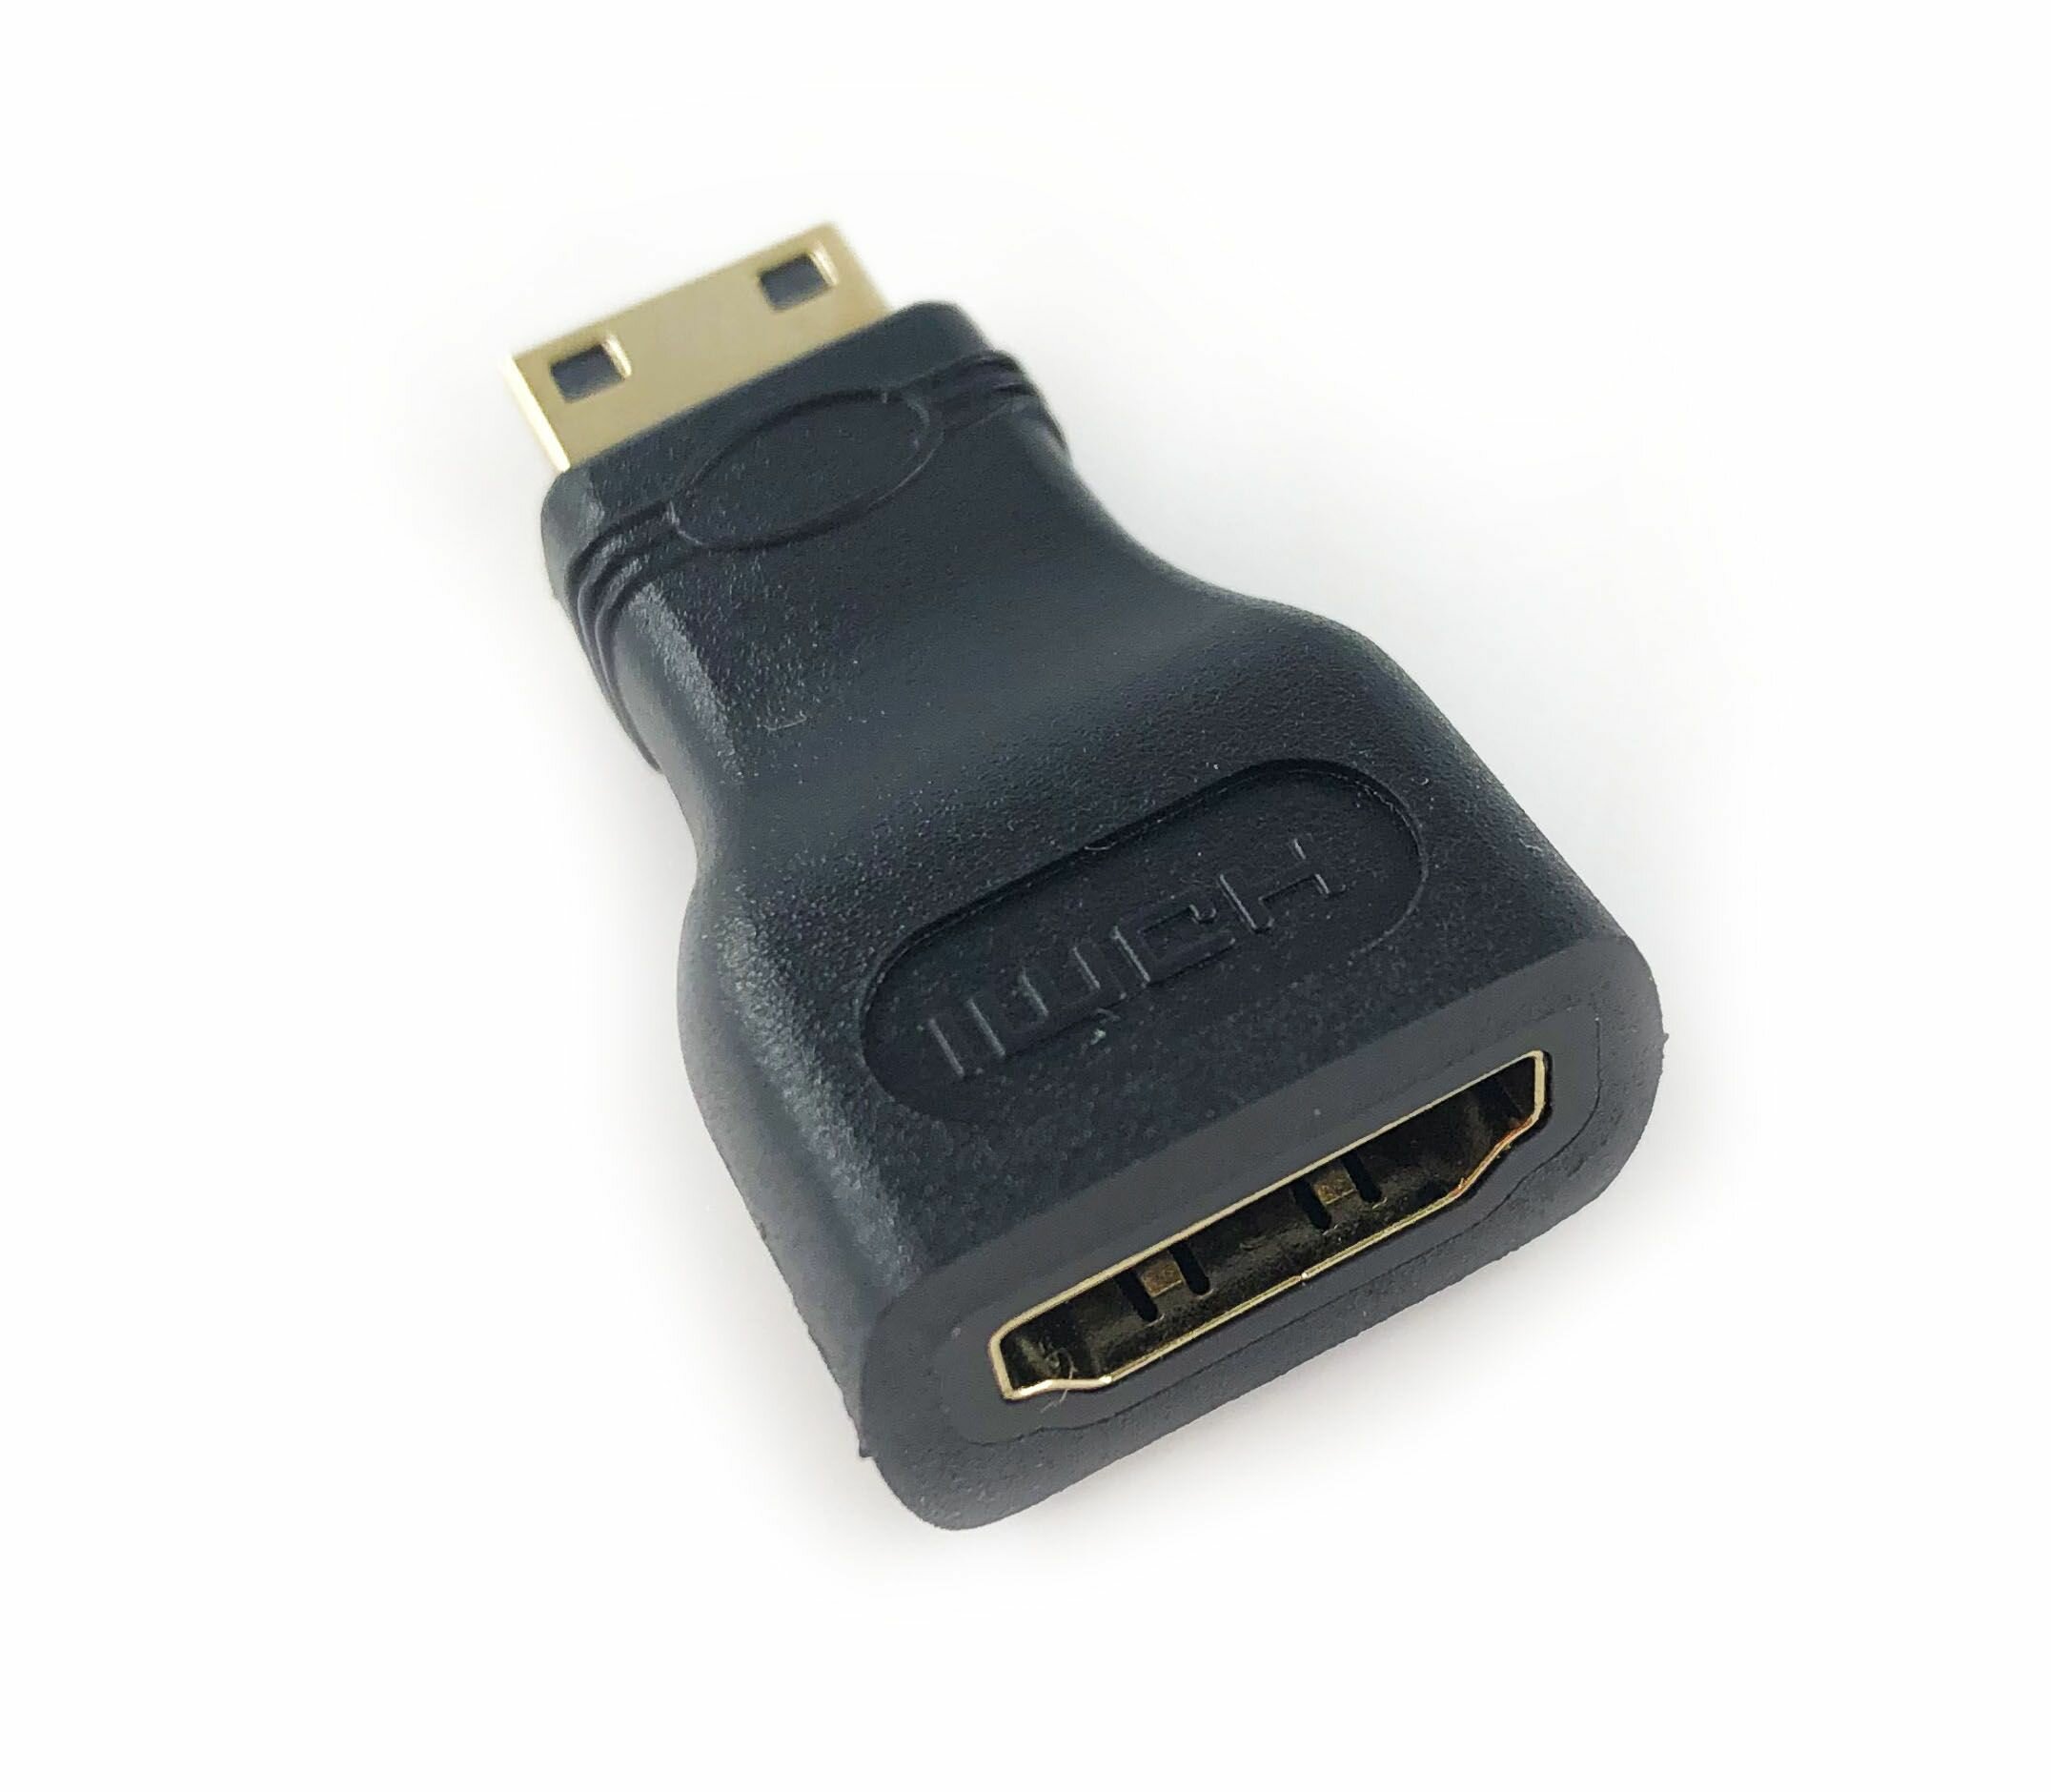 Переходник MINI HDMI штекер-HDMI гнездо пластик позолоченный( 1 штука)